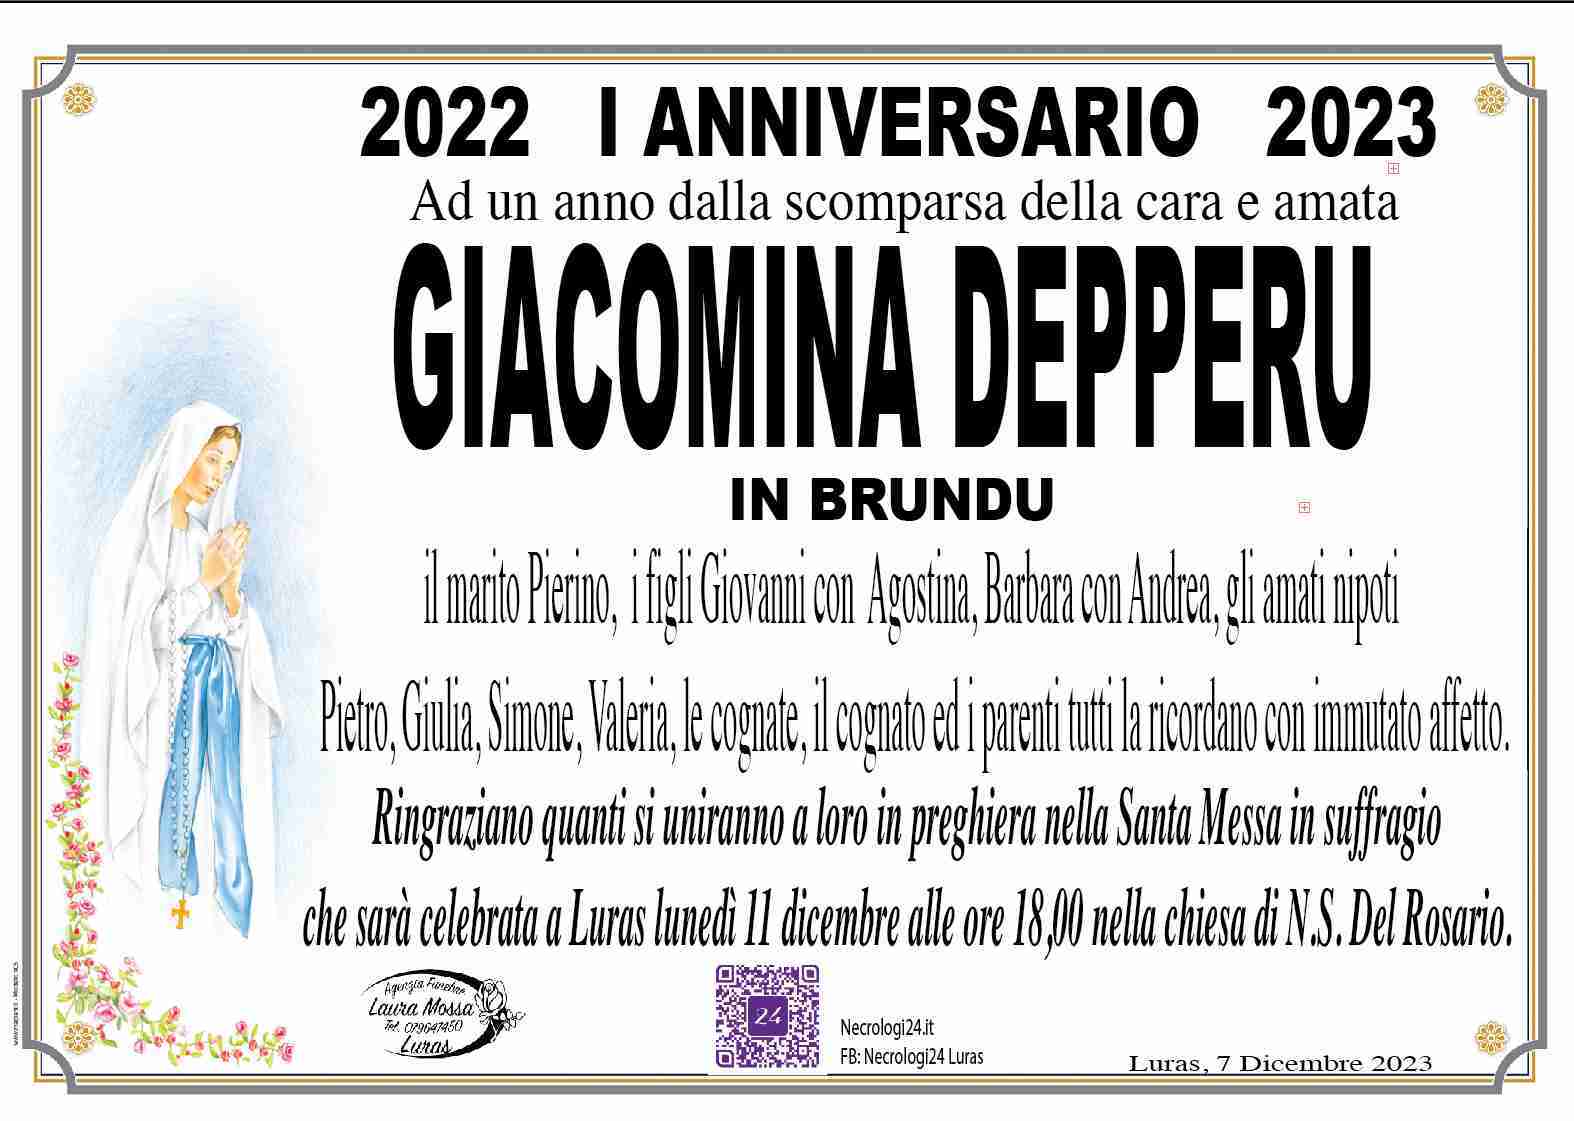 Giacomina Depperu